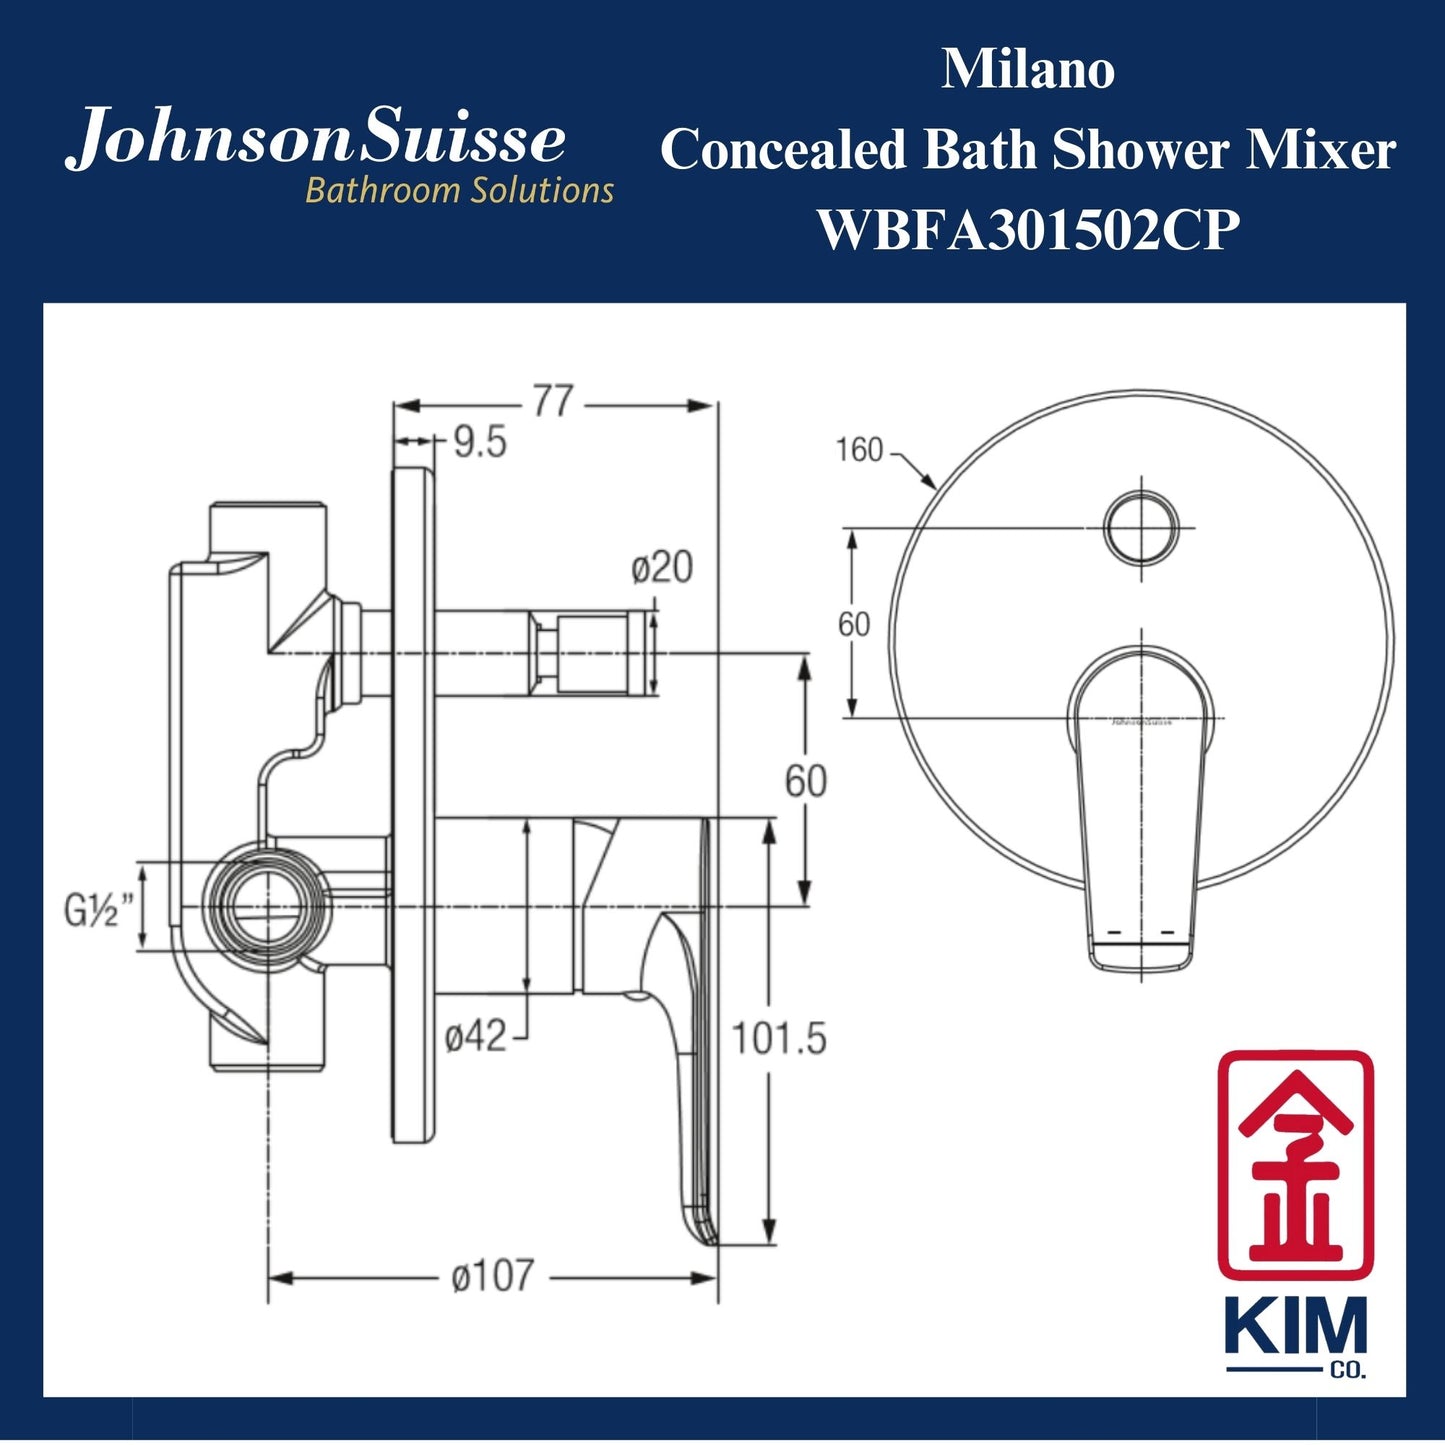 Johnson Suisse Milano Concealed Bath Shower Mixer (WBFA301502CP)